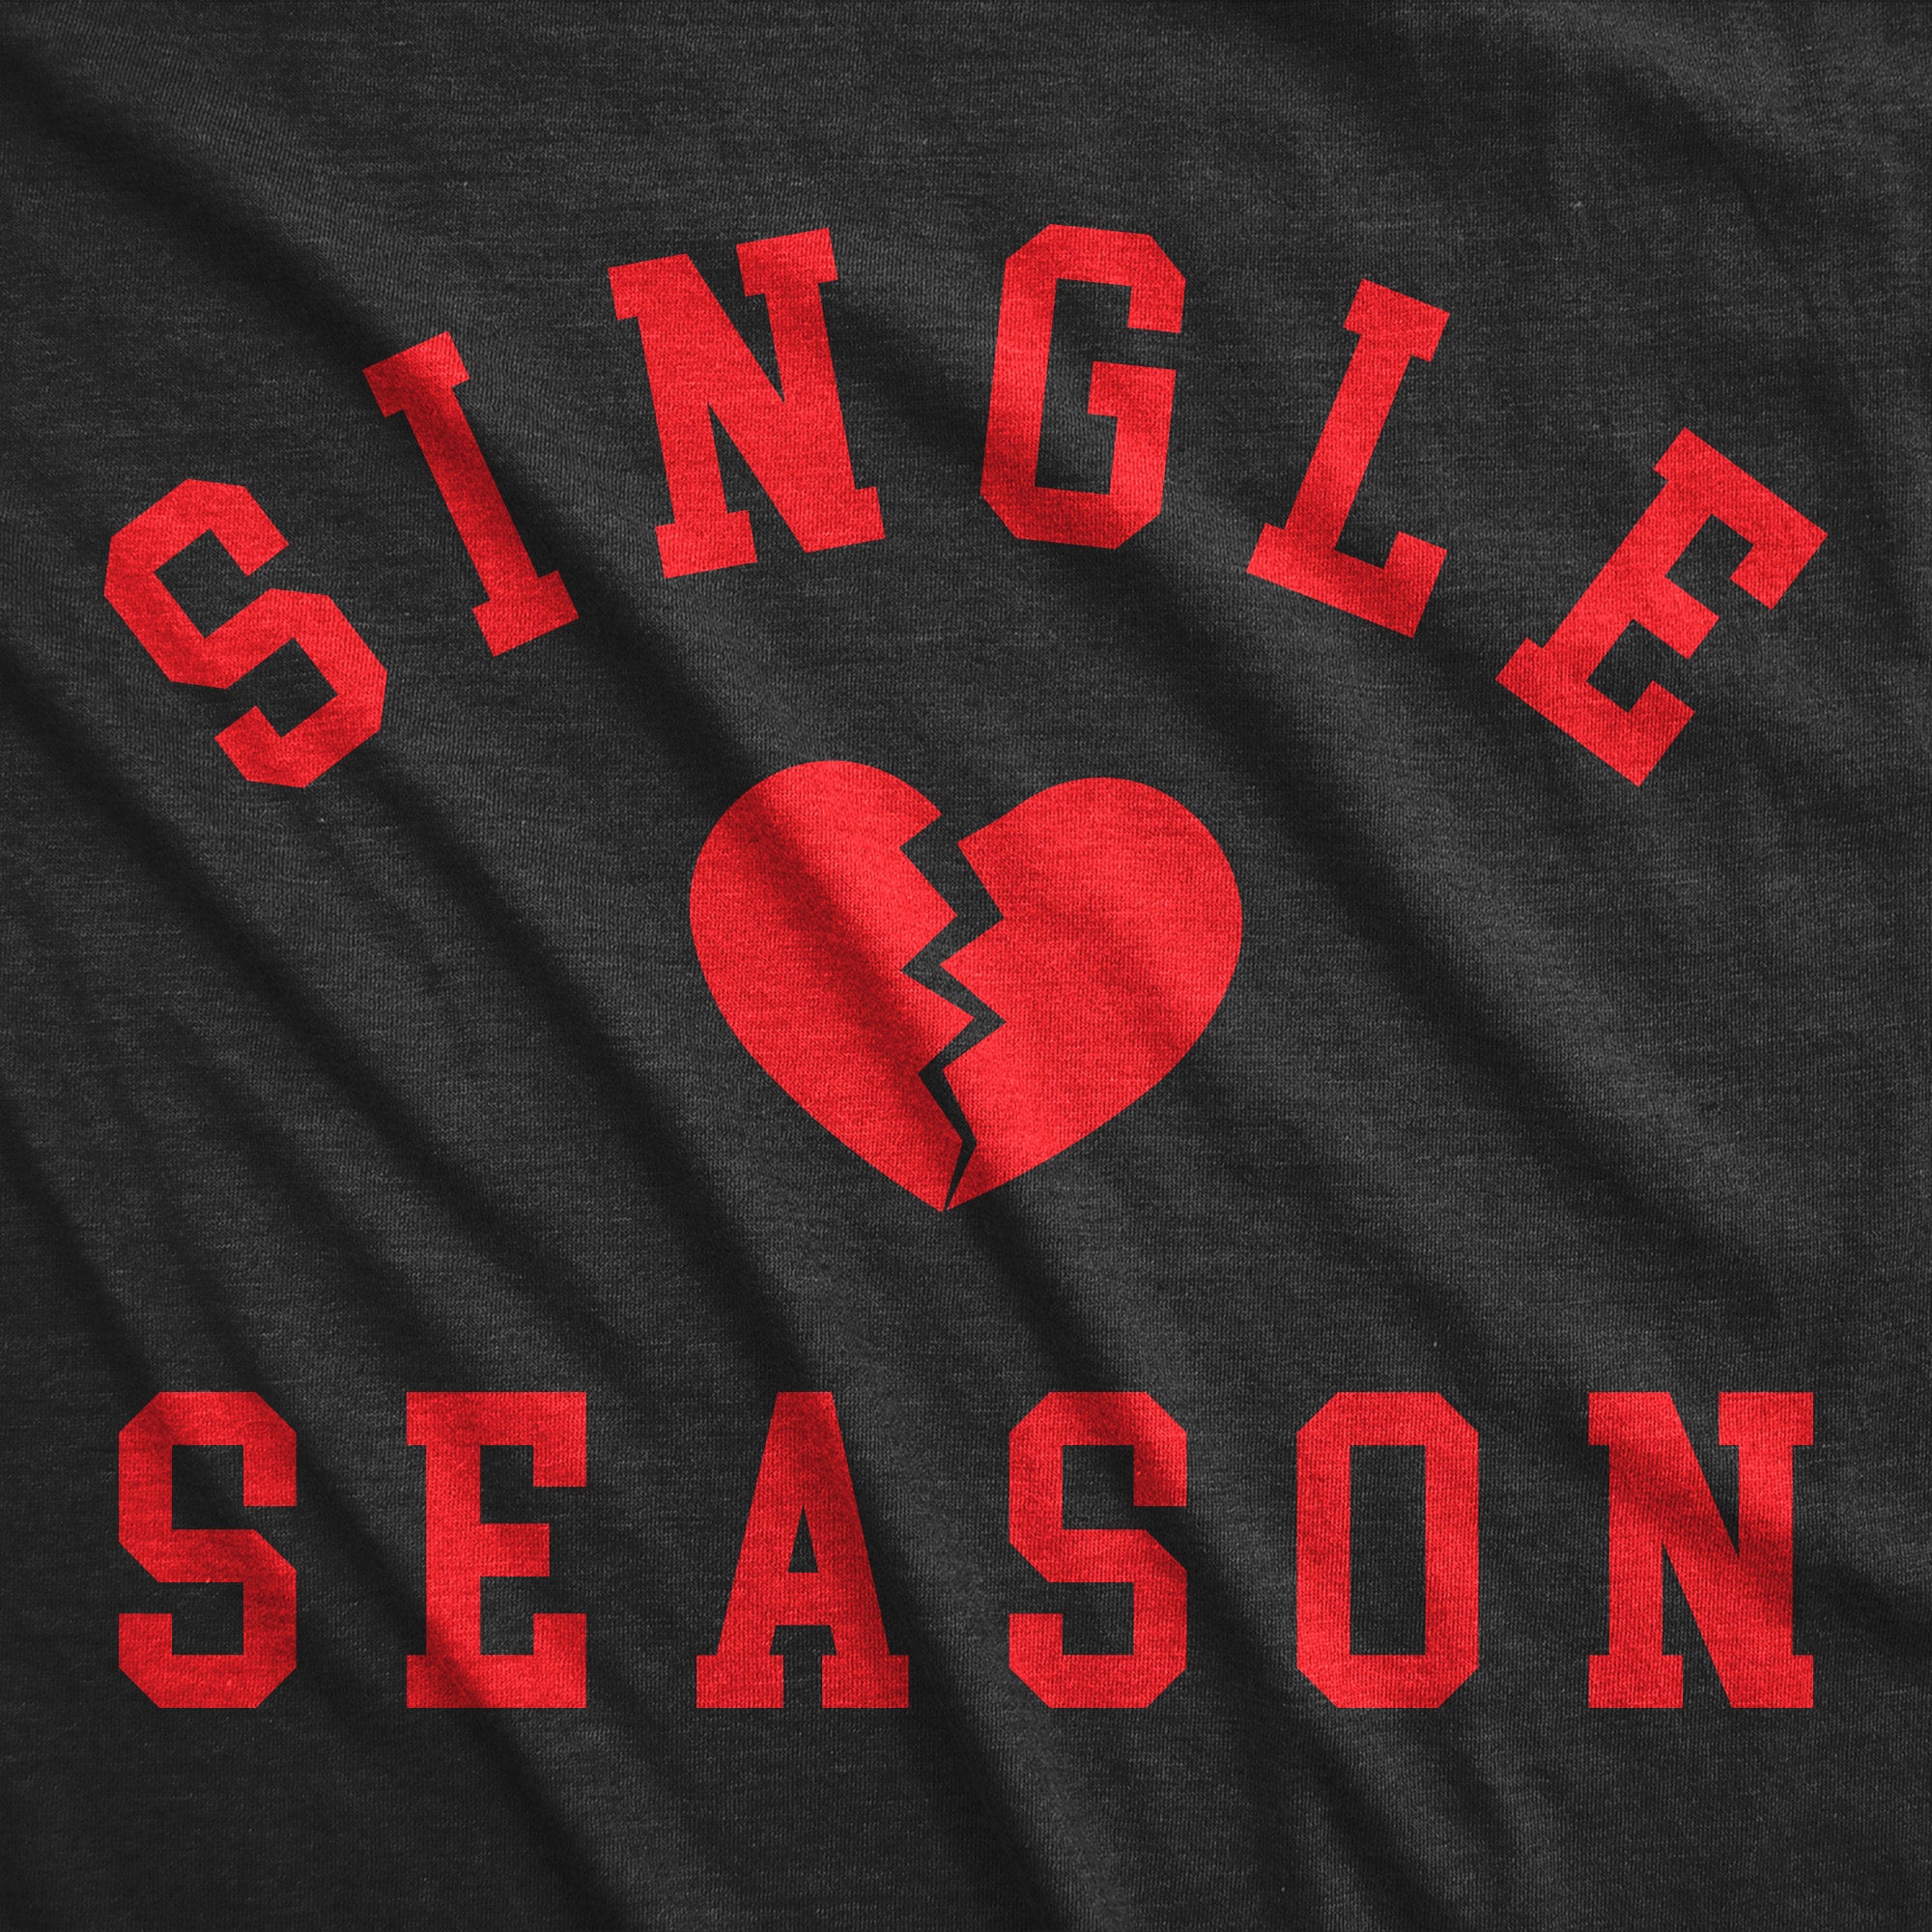 Funny Heather Black - Single Season Single Season Womens T Shirt Nerdy Valentines Day Sarcastic Tee